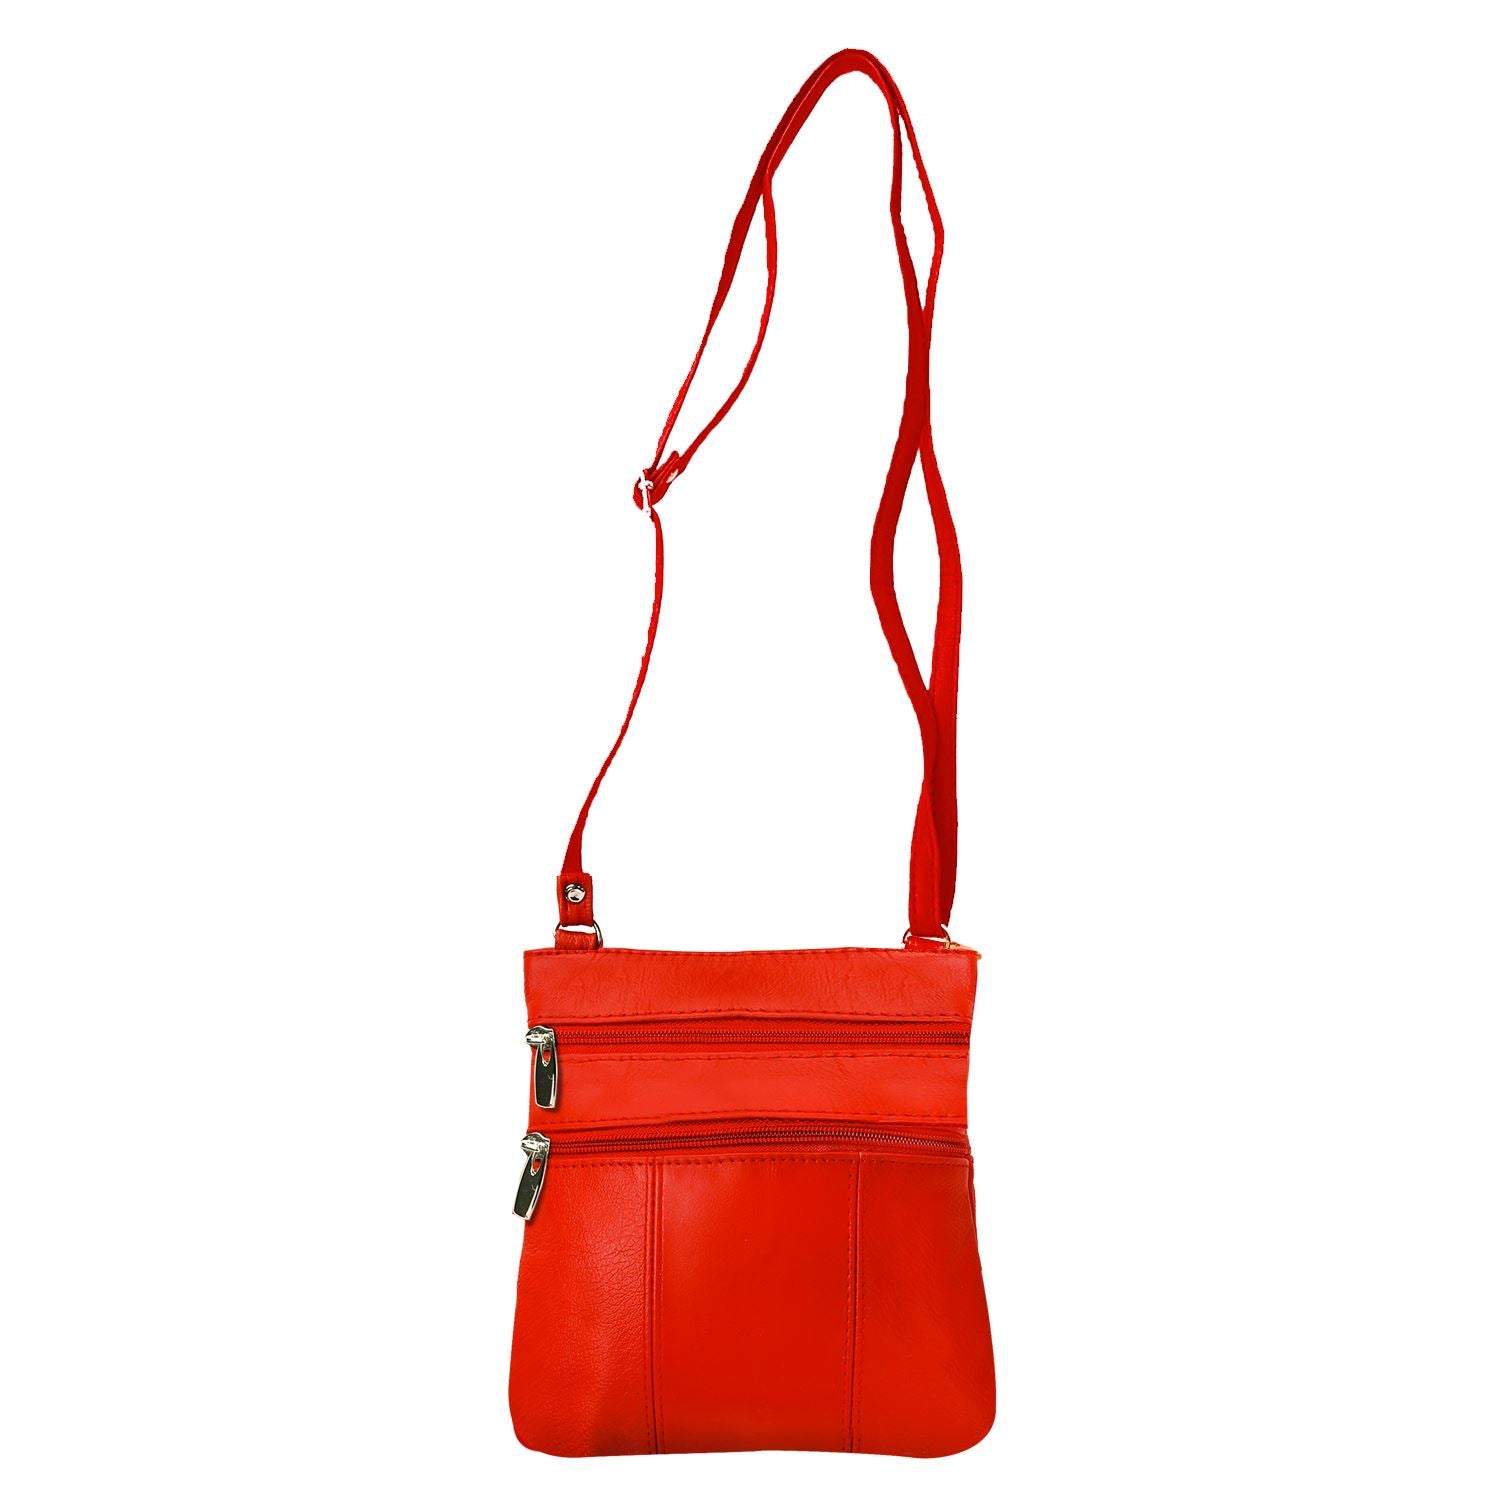 Rose Eyeball Black & Red Purse Bag Handbag